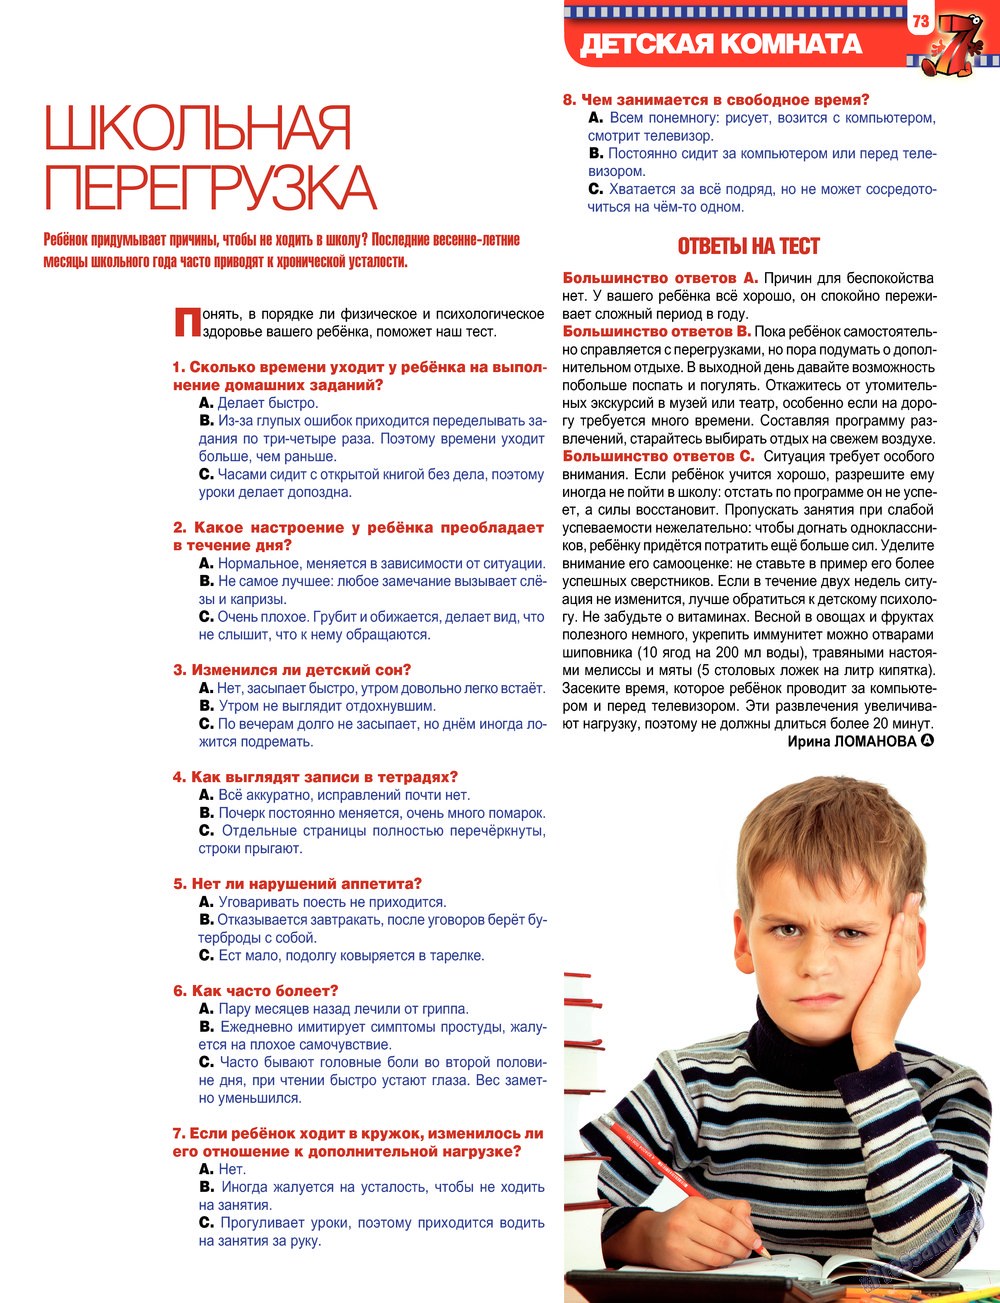 7плюс7я (журнал). 2013 год, номер 17, стр. 73